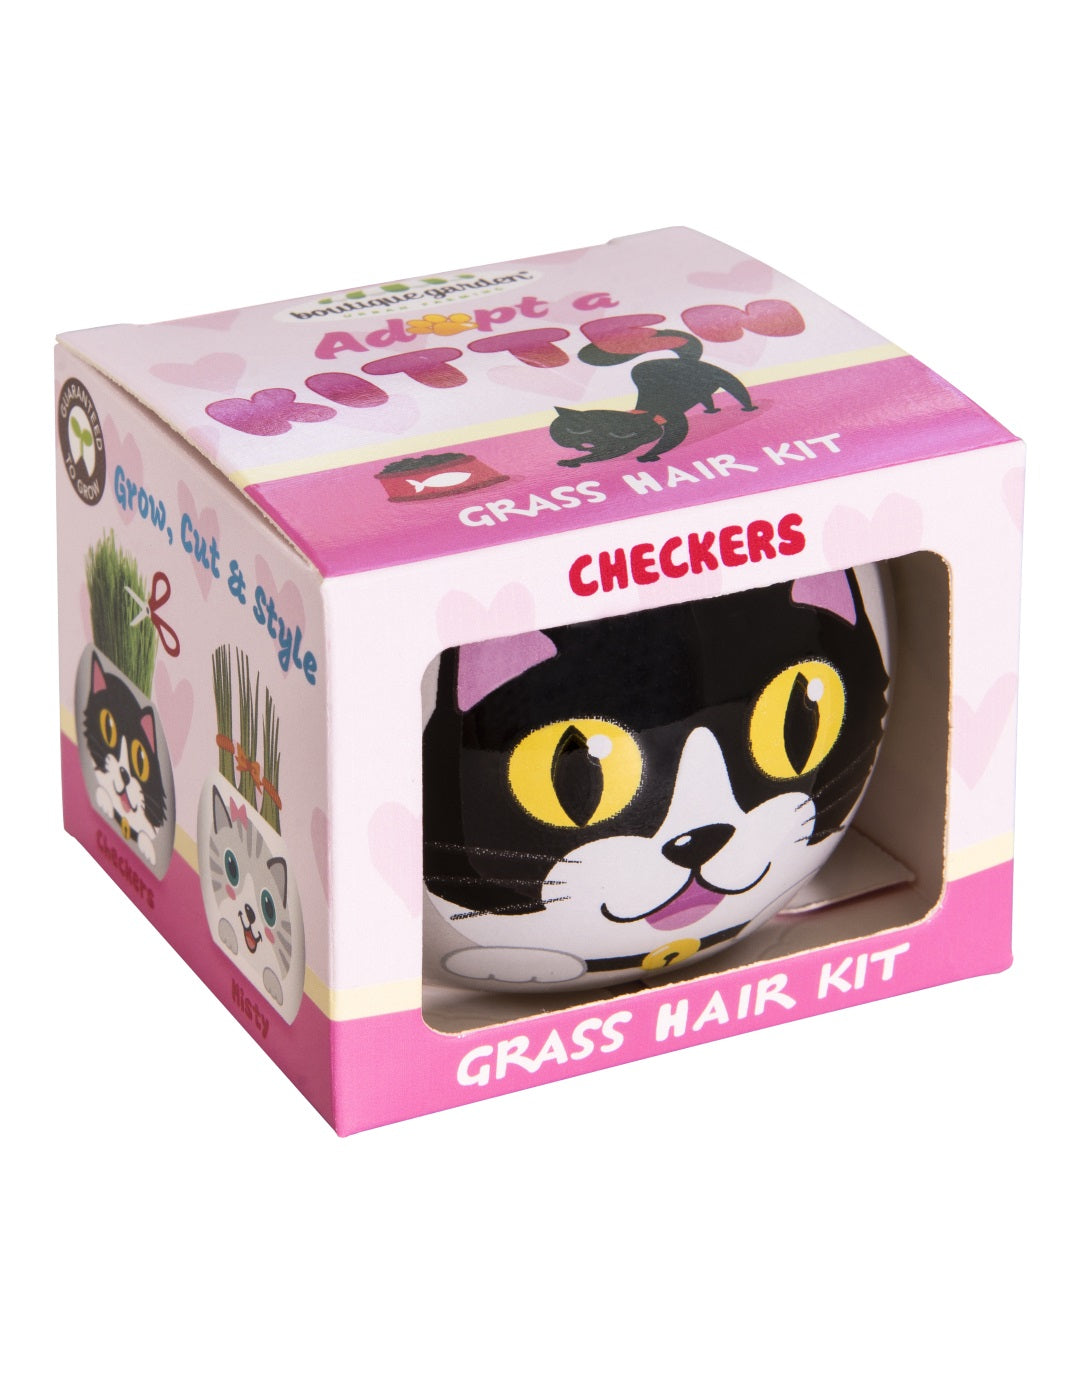 Grass Hair Kit - Kittens (Checkers)